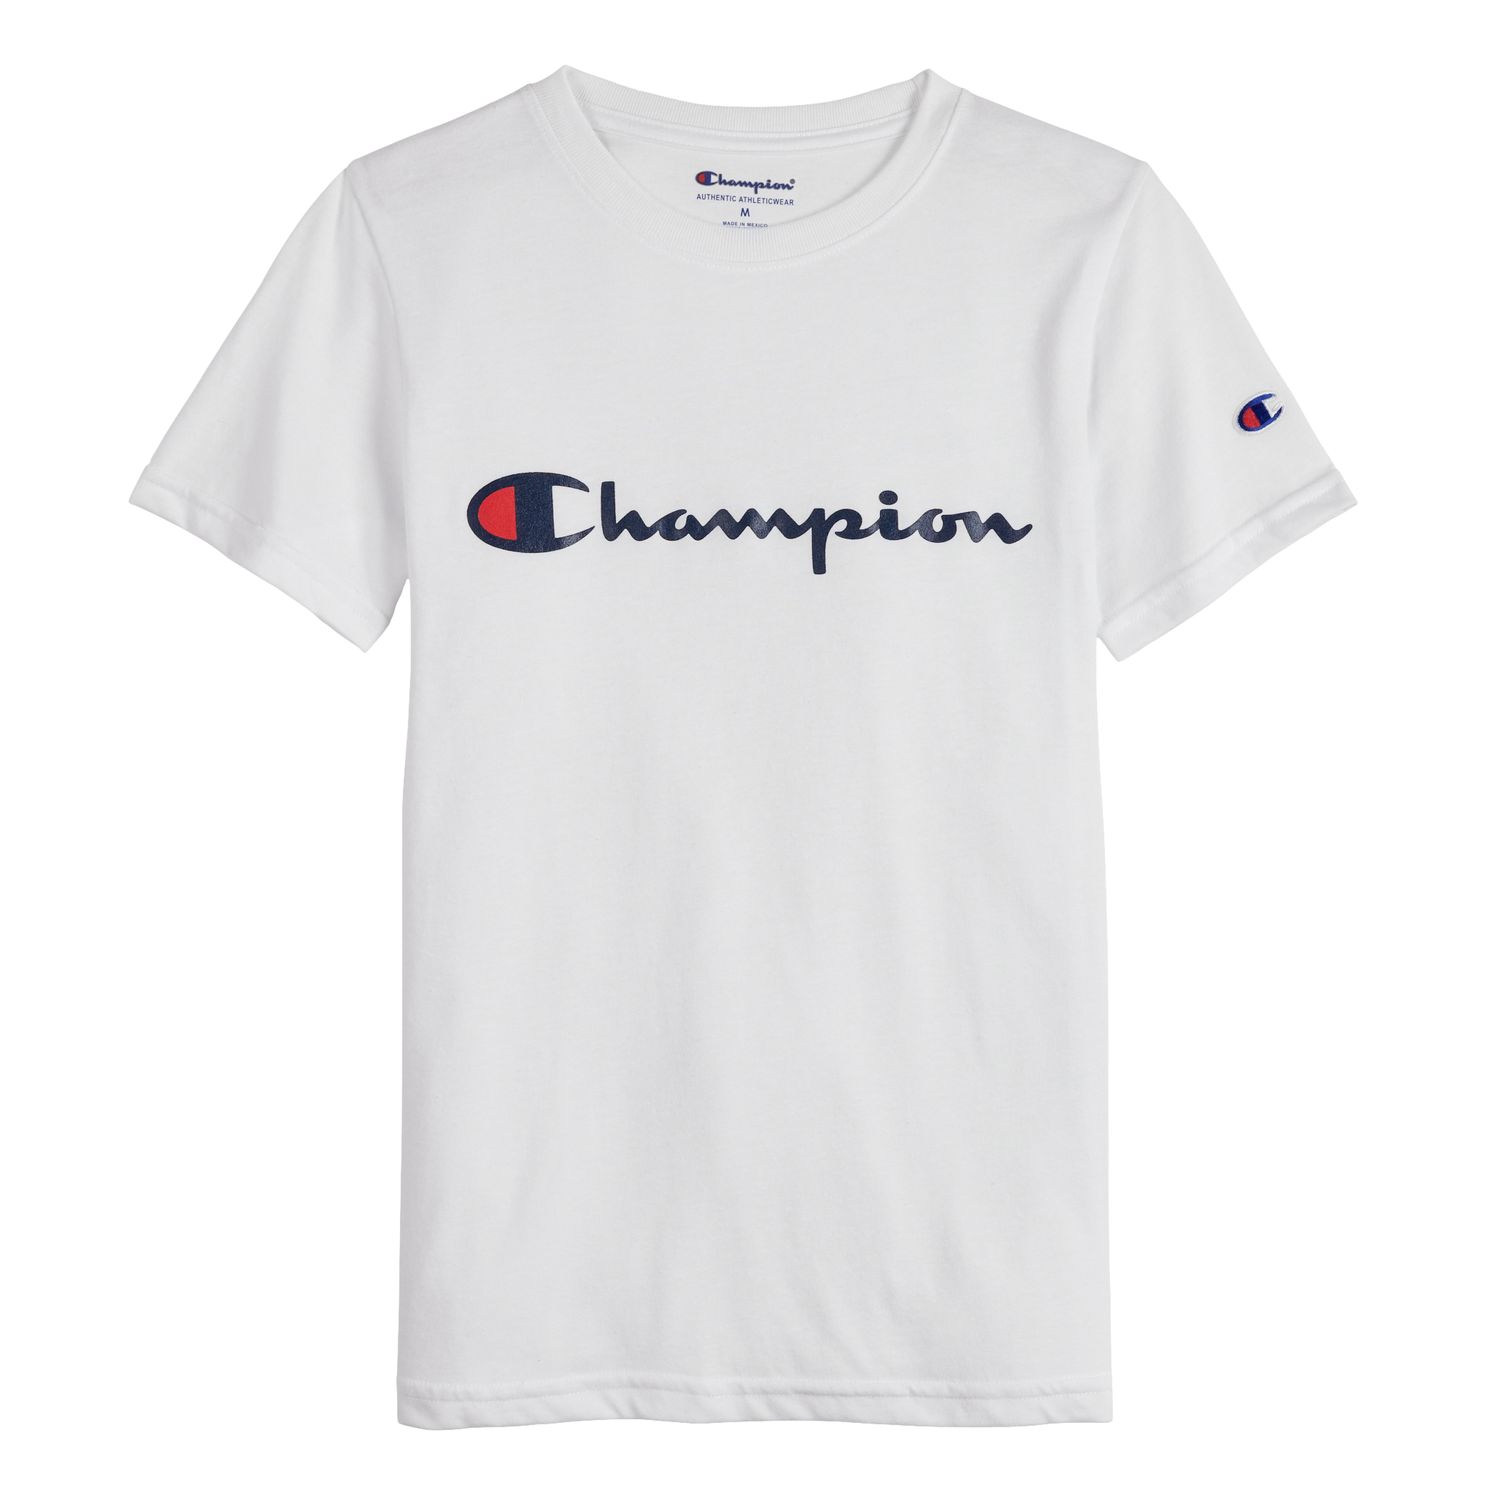 kohl's champion shirt